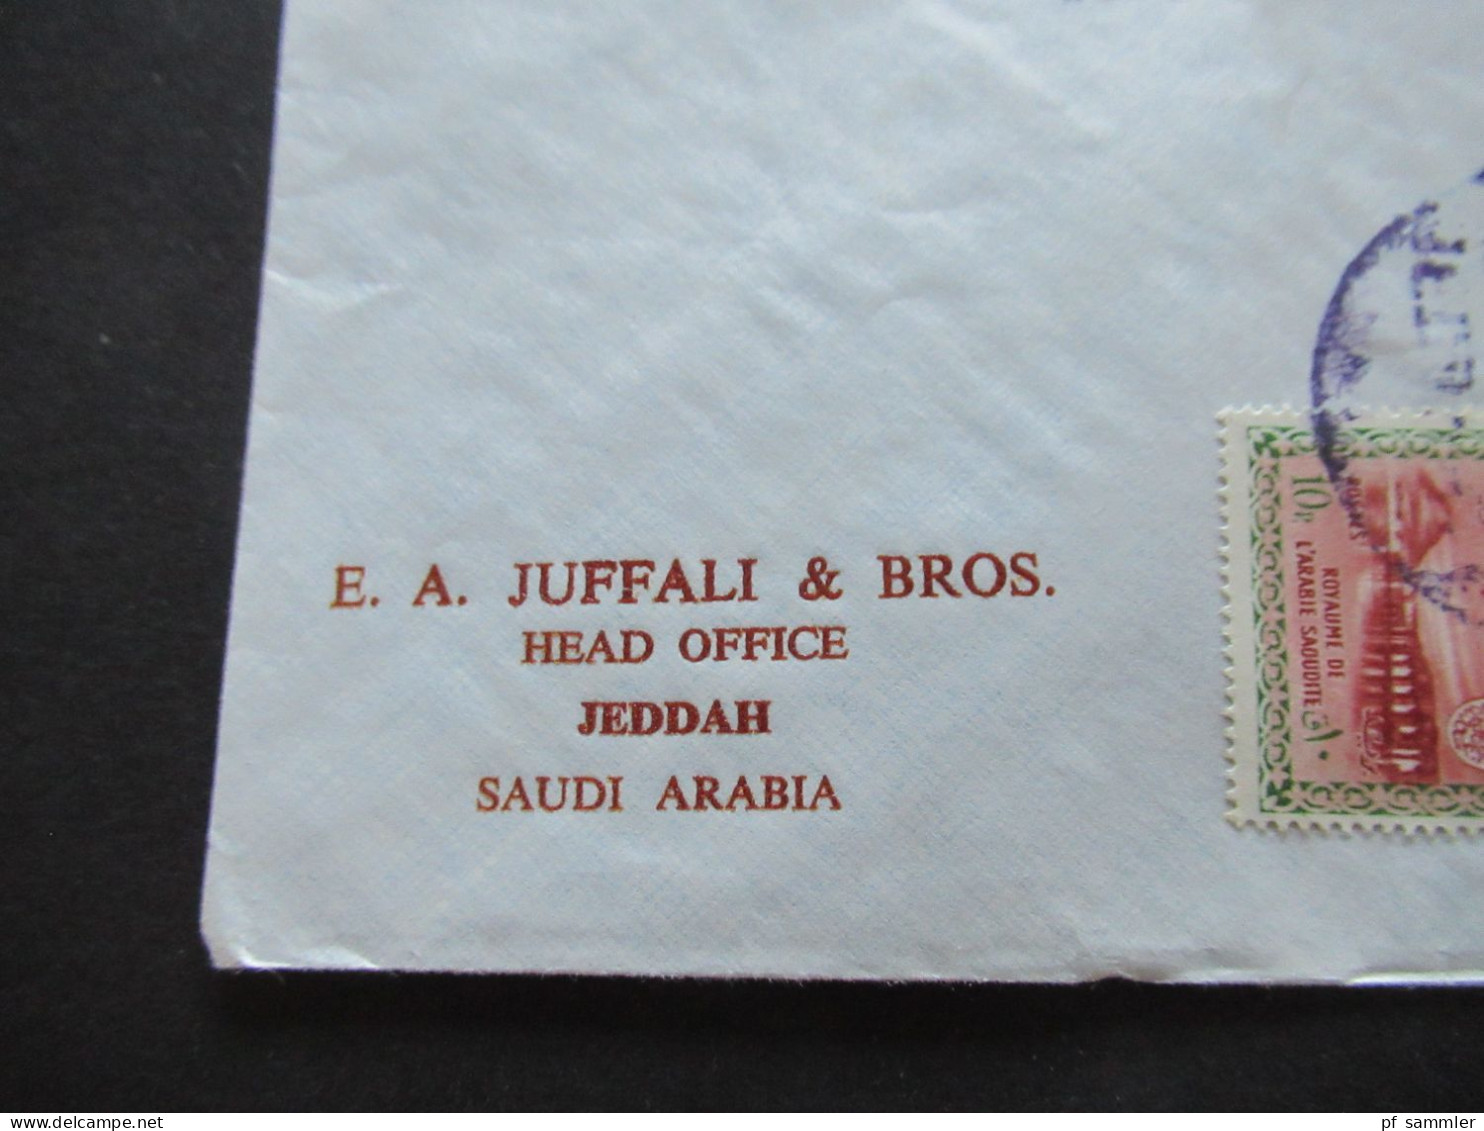 Asien Saudi Arabia um 1965 4x Firmenumschläge Jeddah Saudi Electric und E.A. Juffali Bros. Air Mail / Luftpost